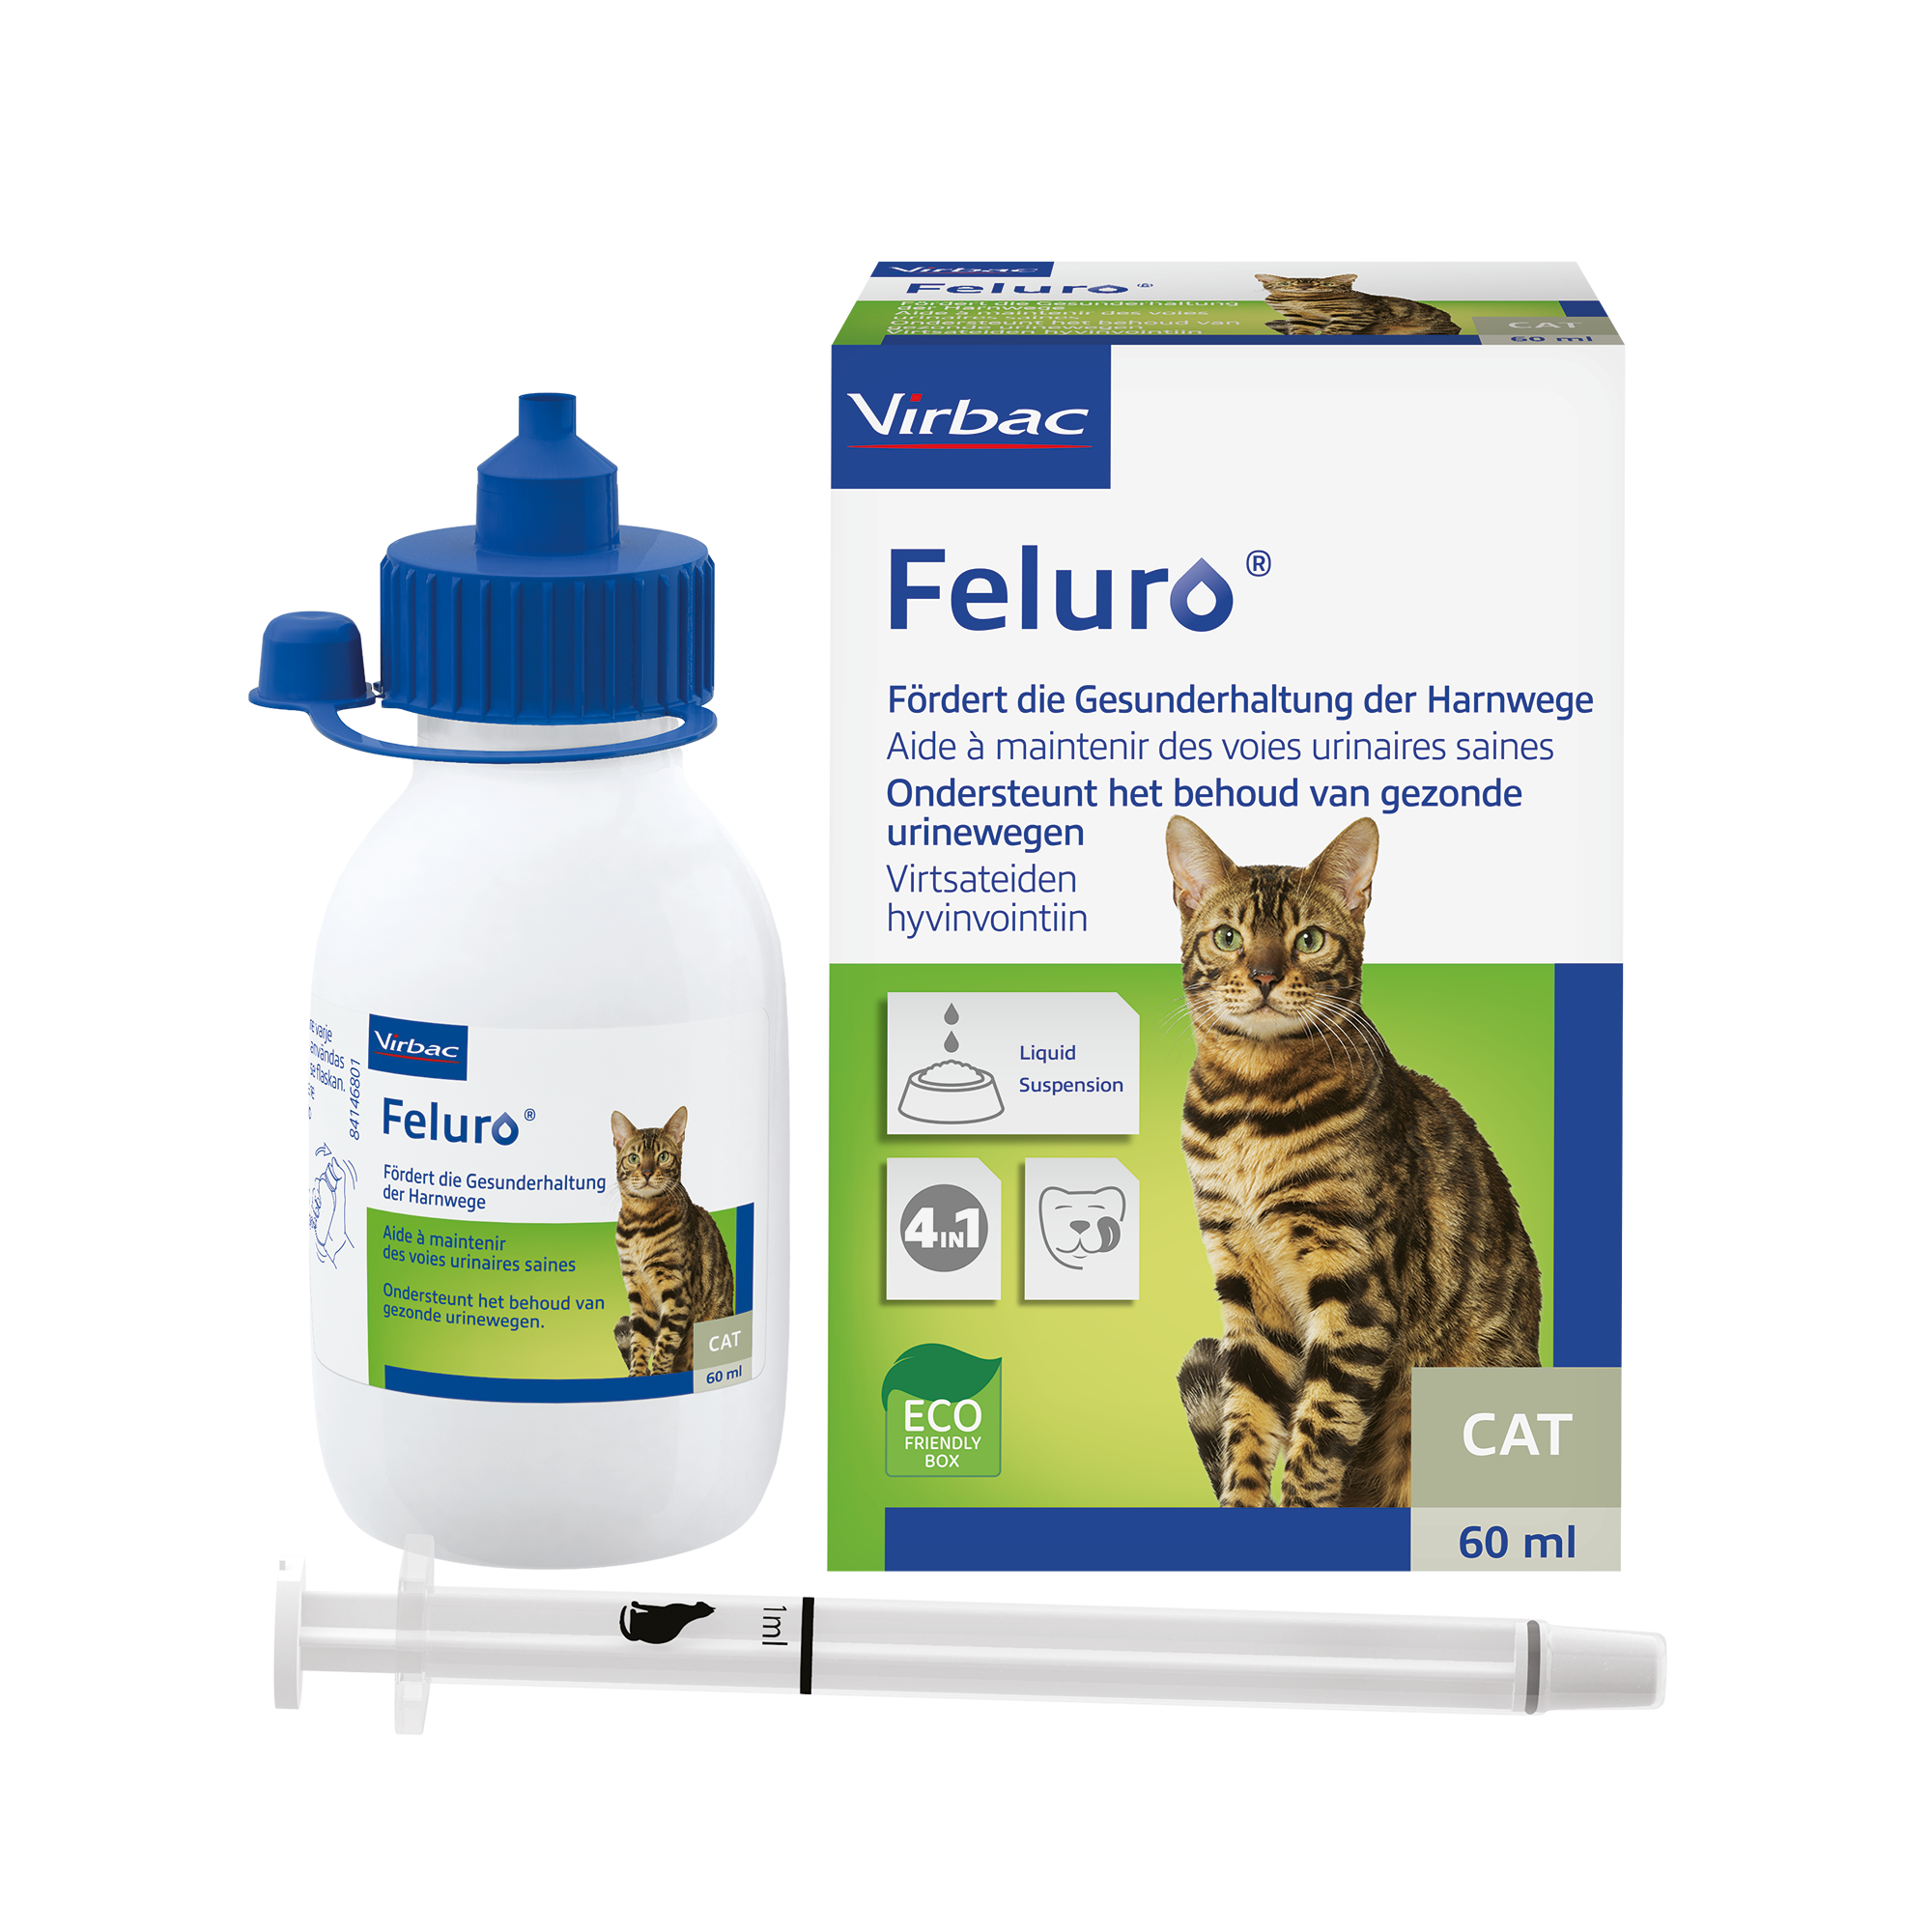 Feluro - Diätergänzungsfuttermittel für Katzen